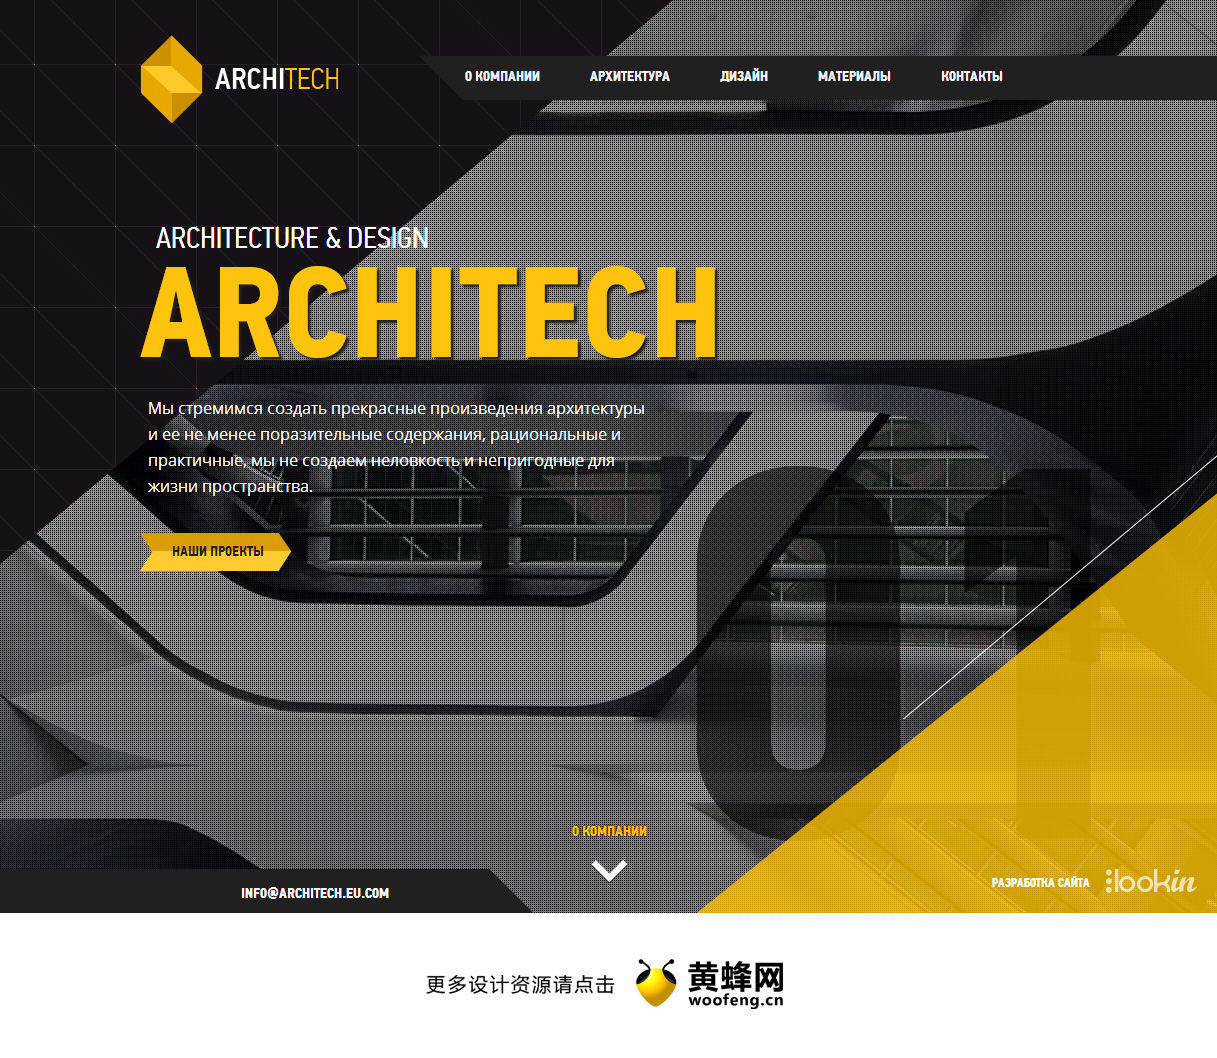 ARCHITECH建筑与设计，来源自黄蜂网https://woofeng.cn/web